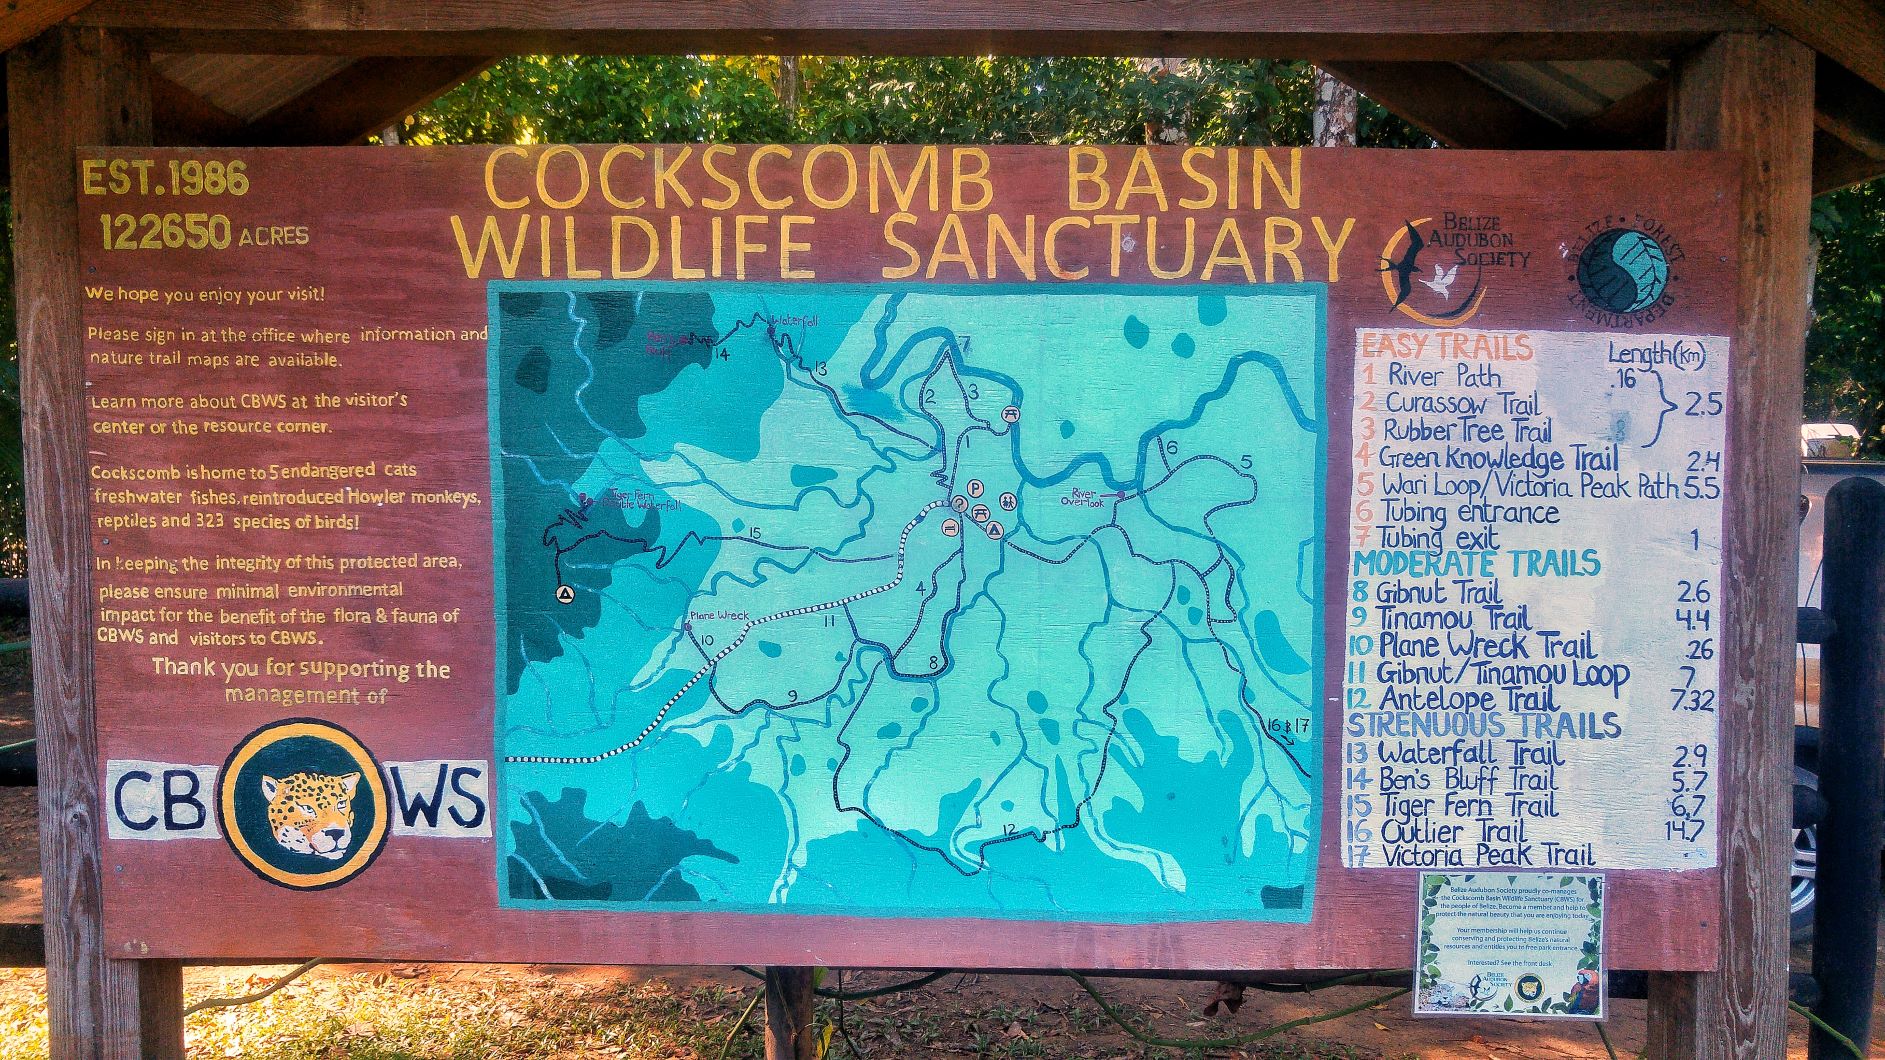 Cockscomb Basin Wildlife Sanctuary Hiking Trails Map